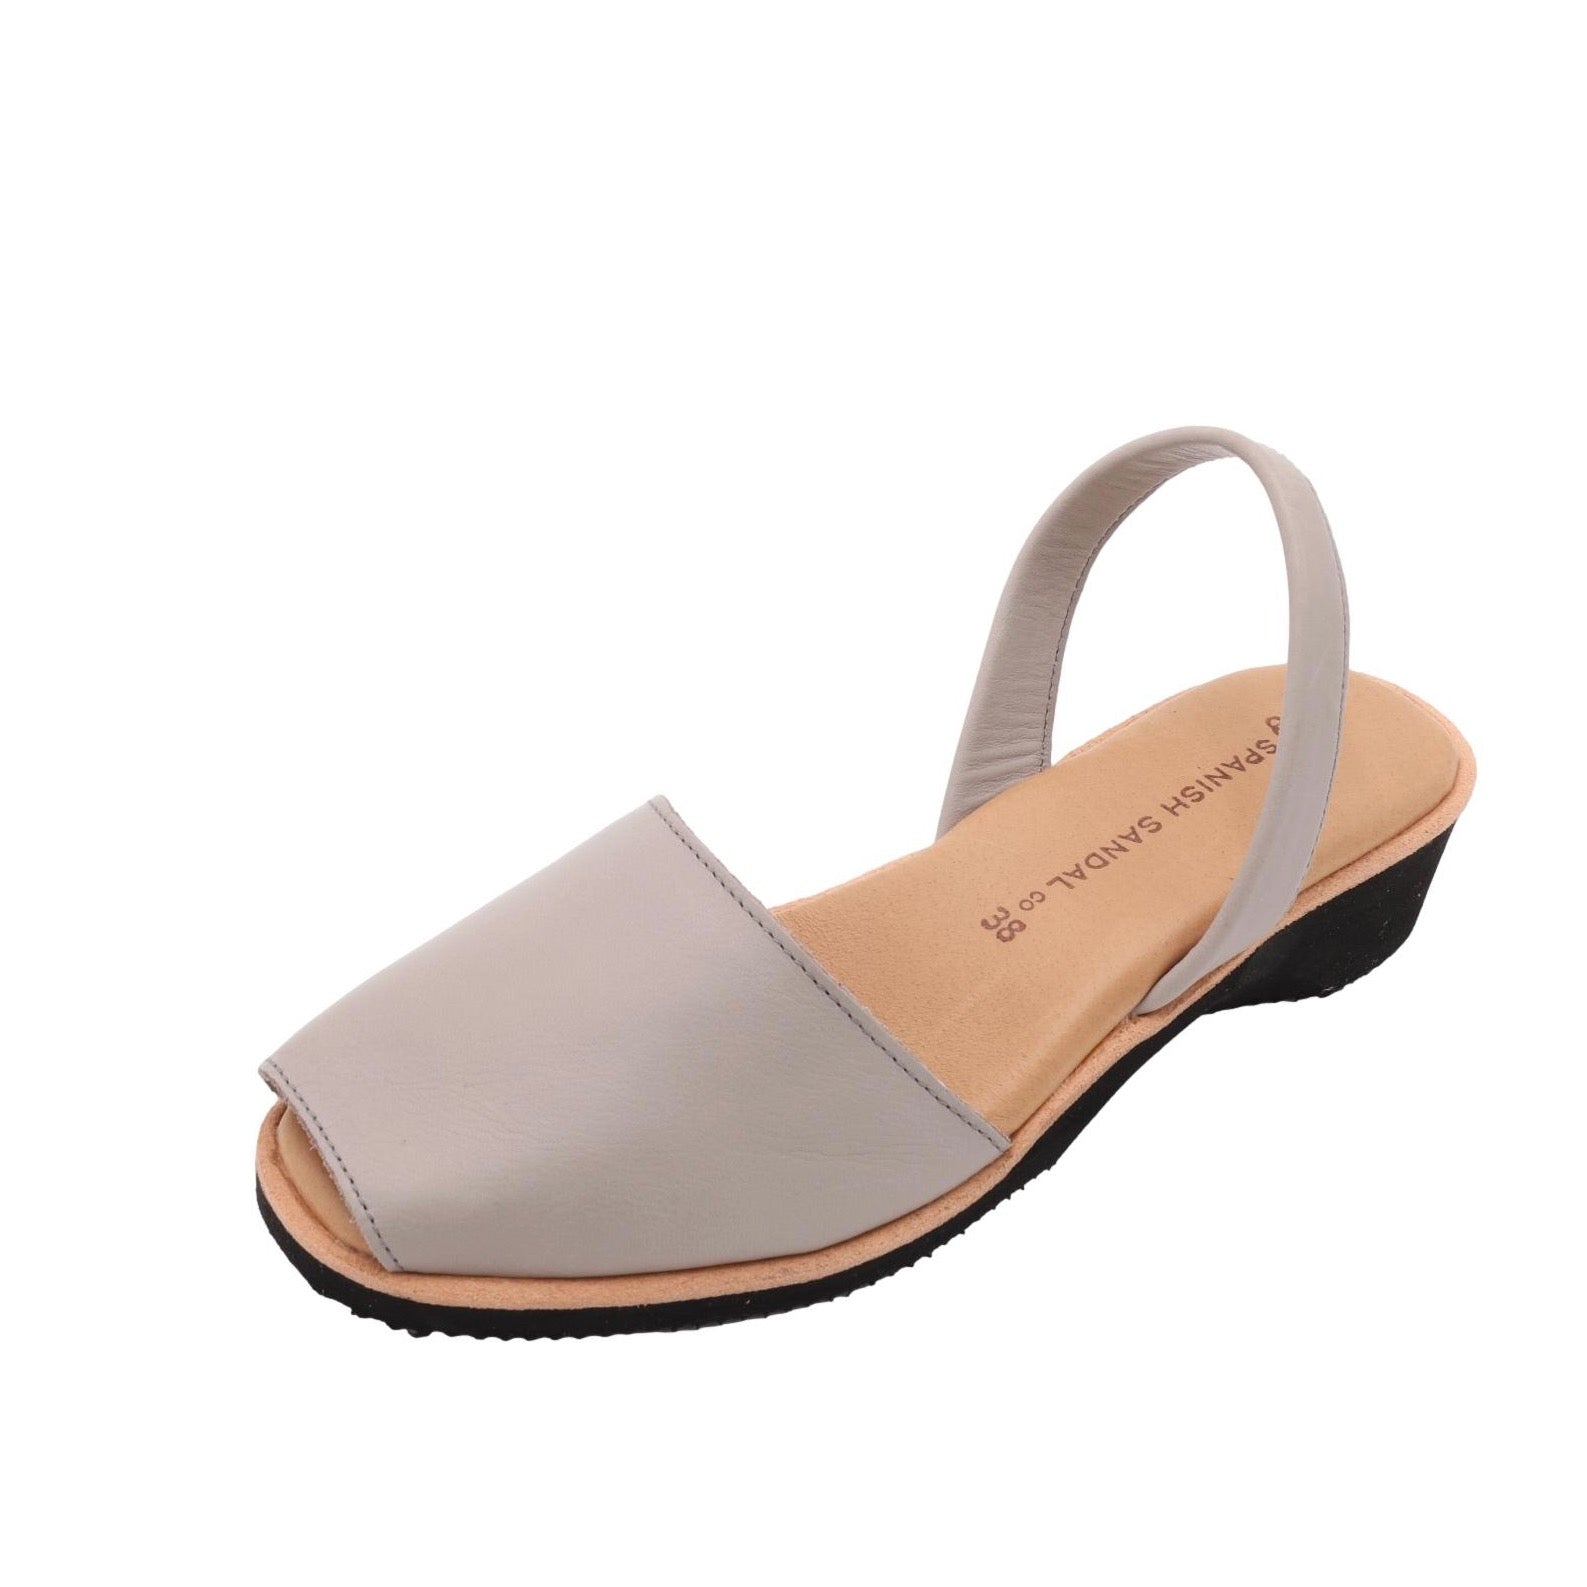 Grey midi wedge sandals